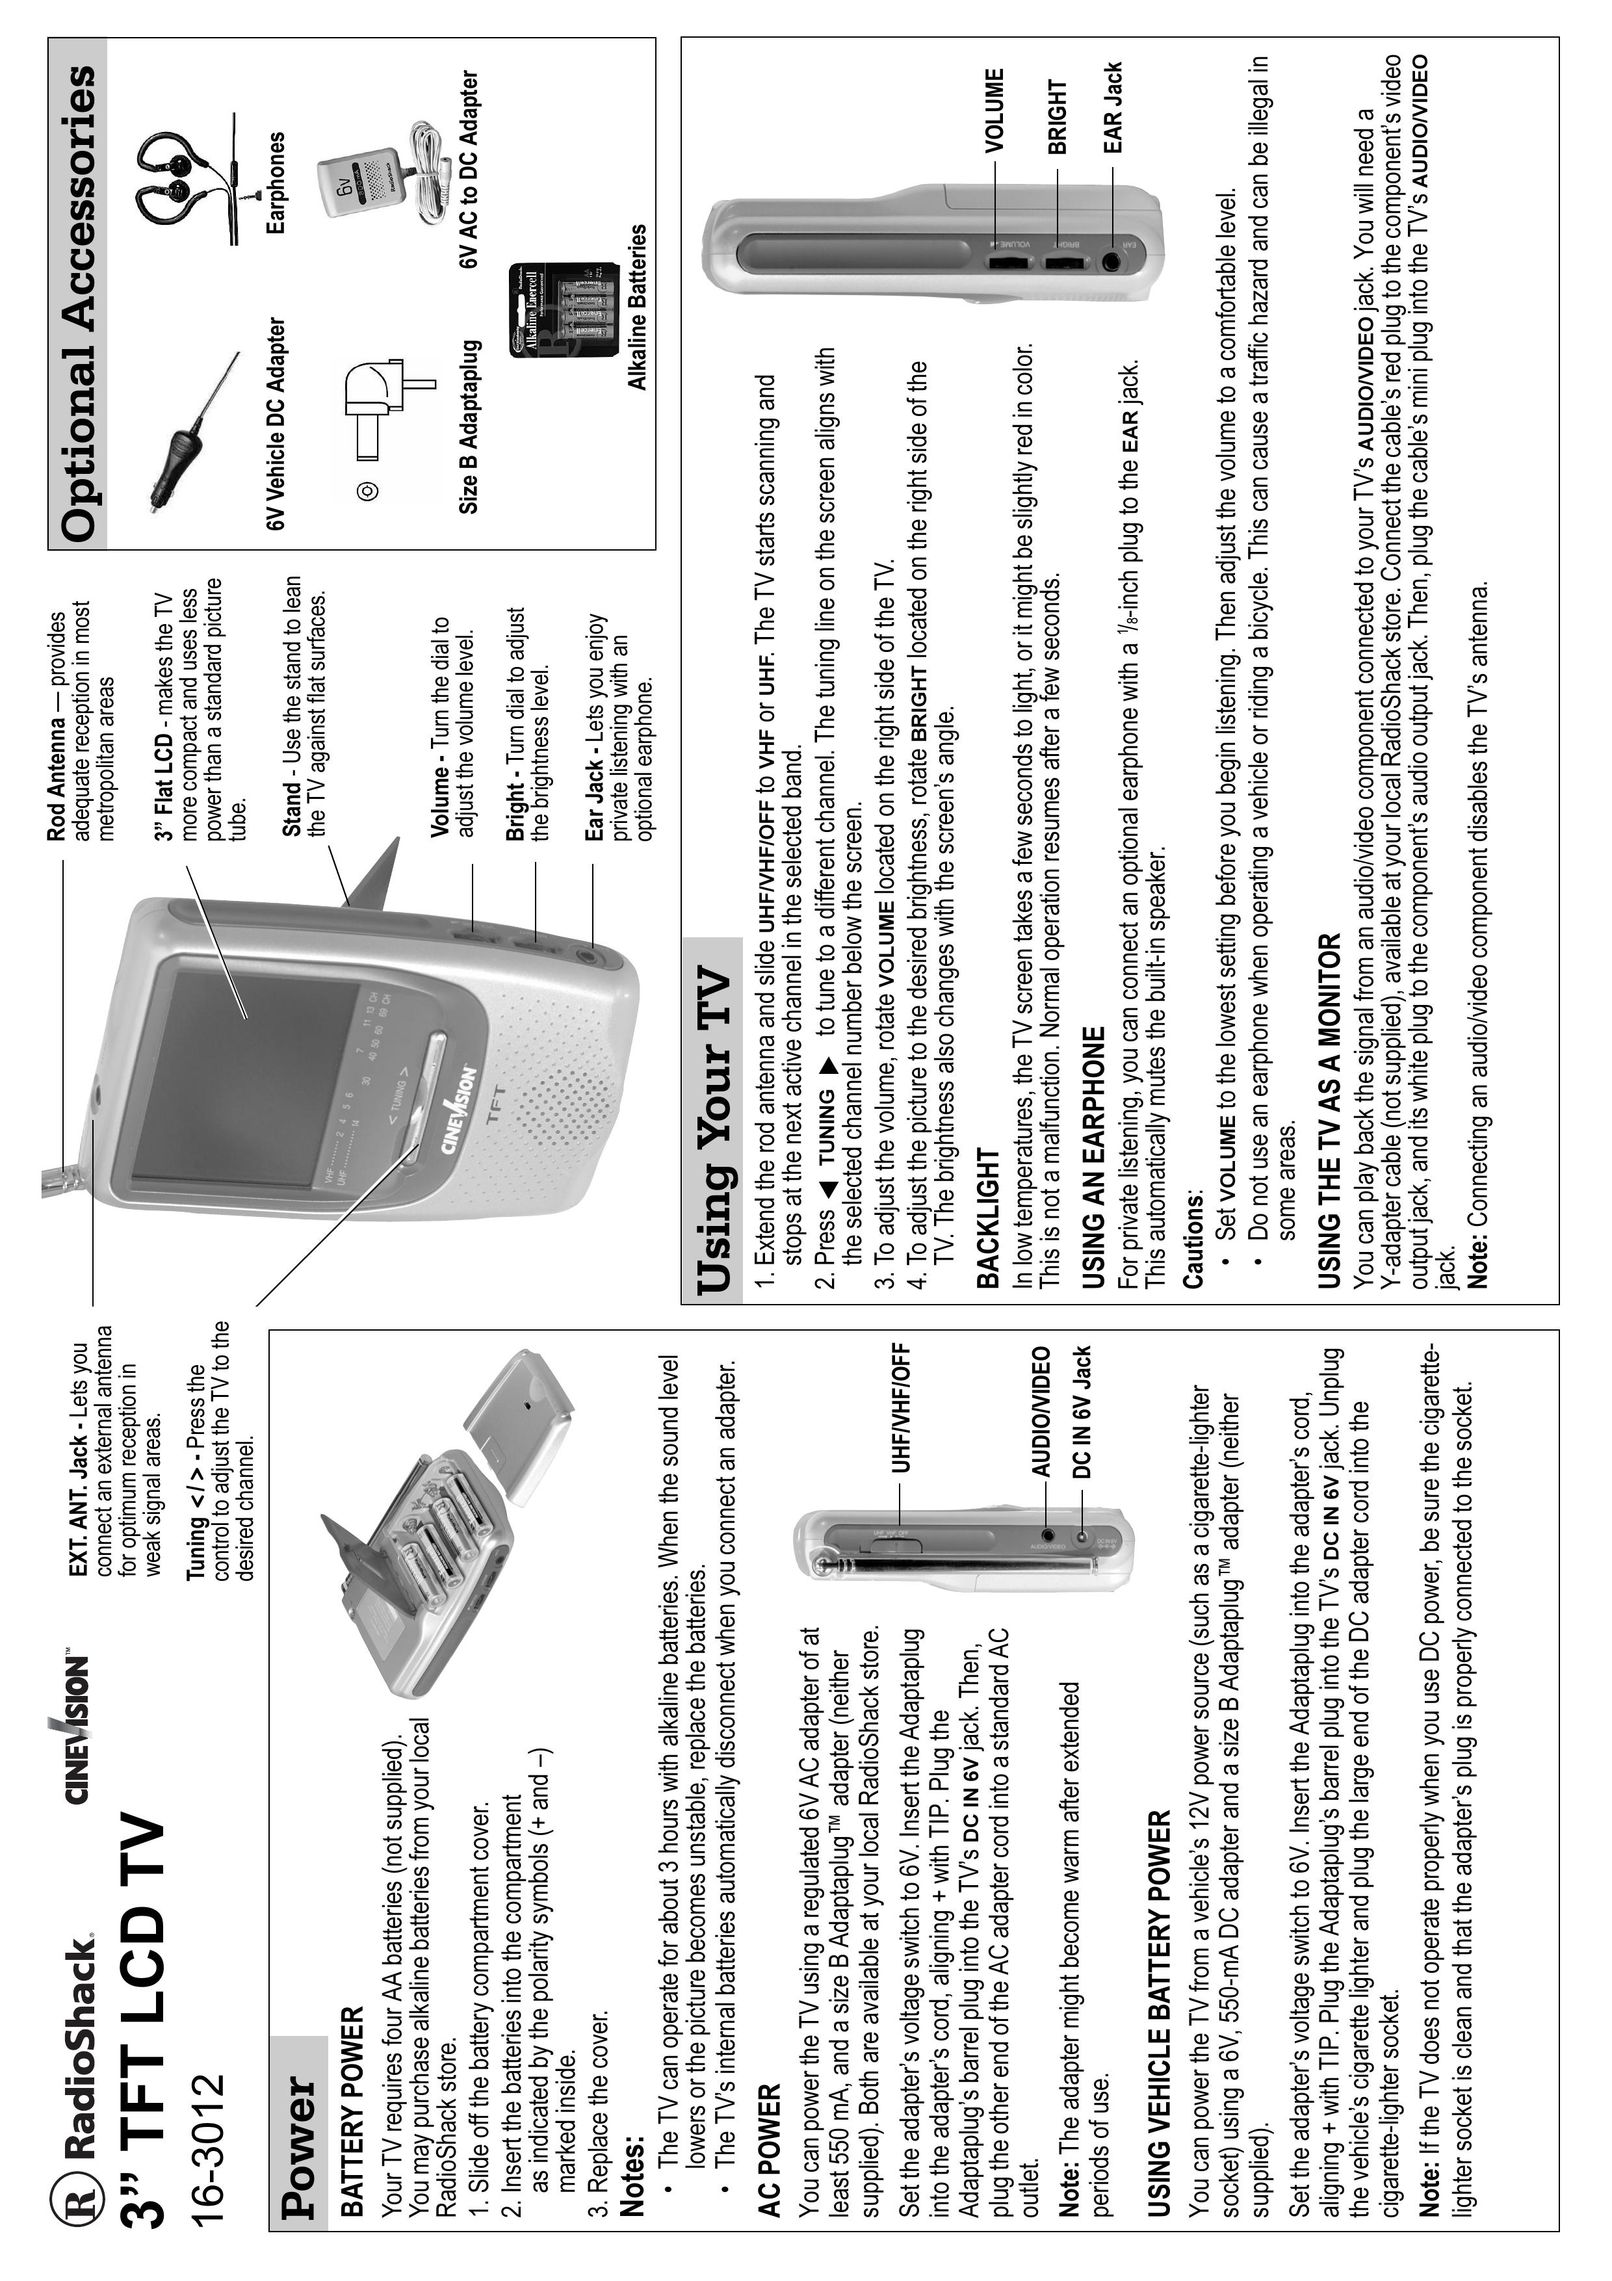 Radio Shack 16-3012 Flat Panel Television User Manual